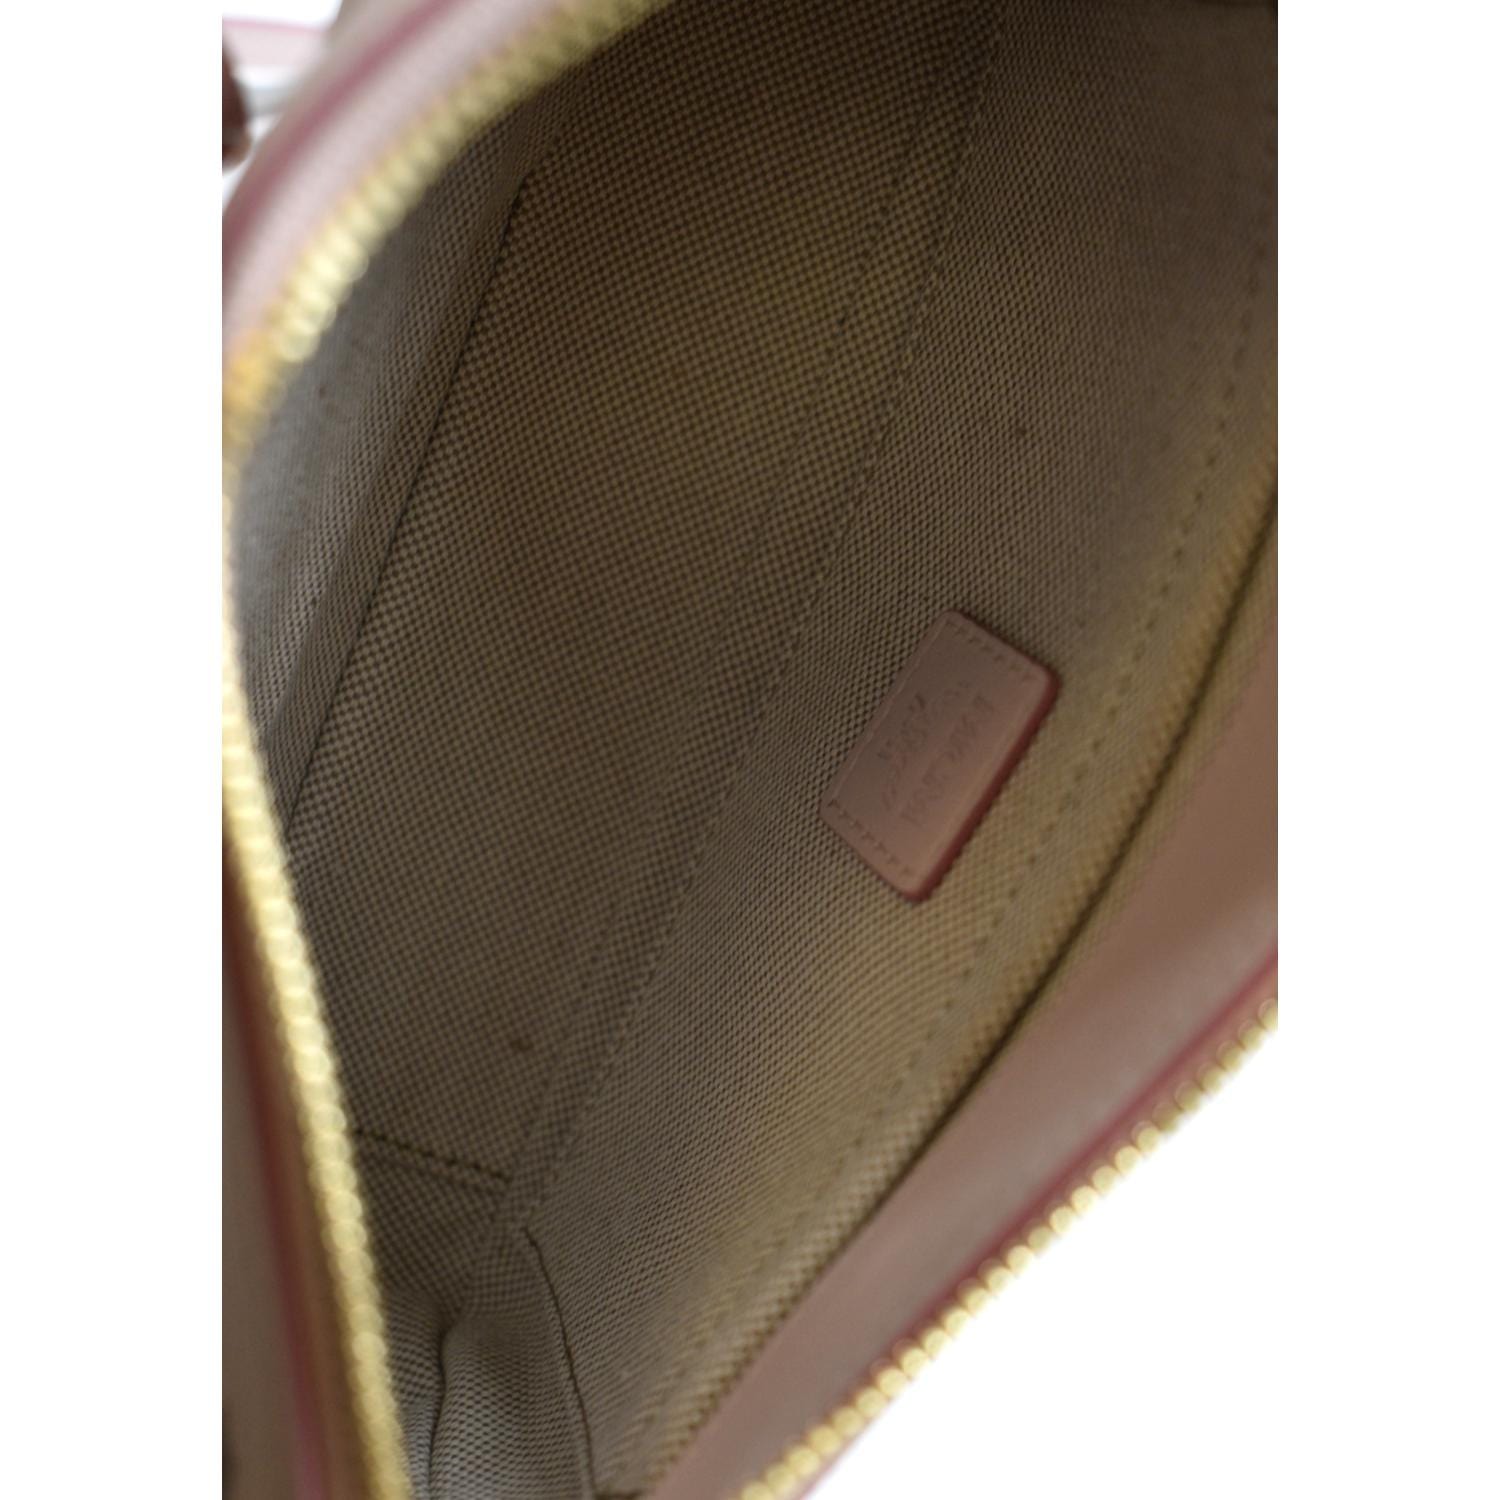 Mcm Delmy Visetos Monogram Canvas Leather Shoulder Bag